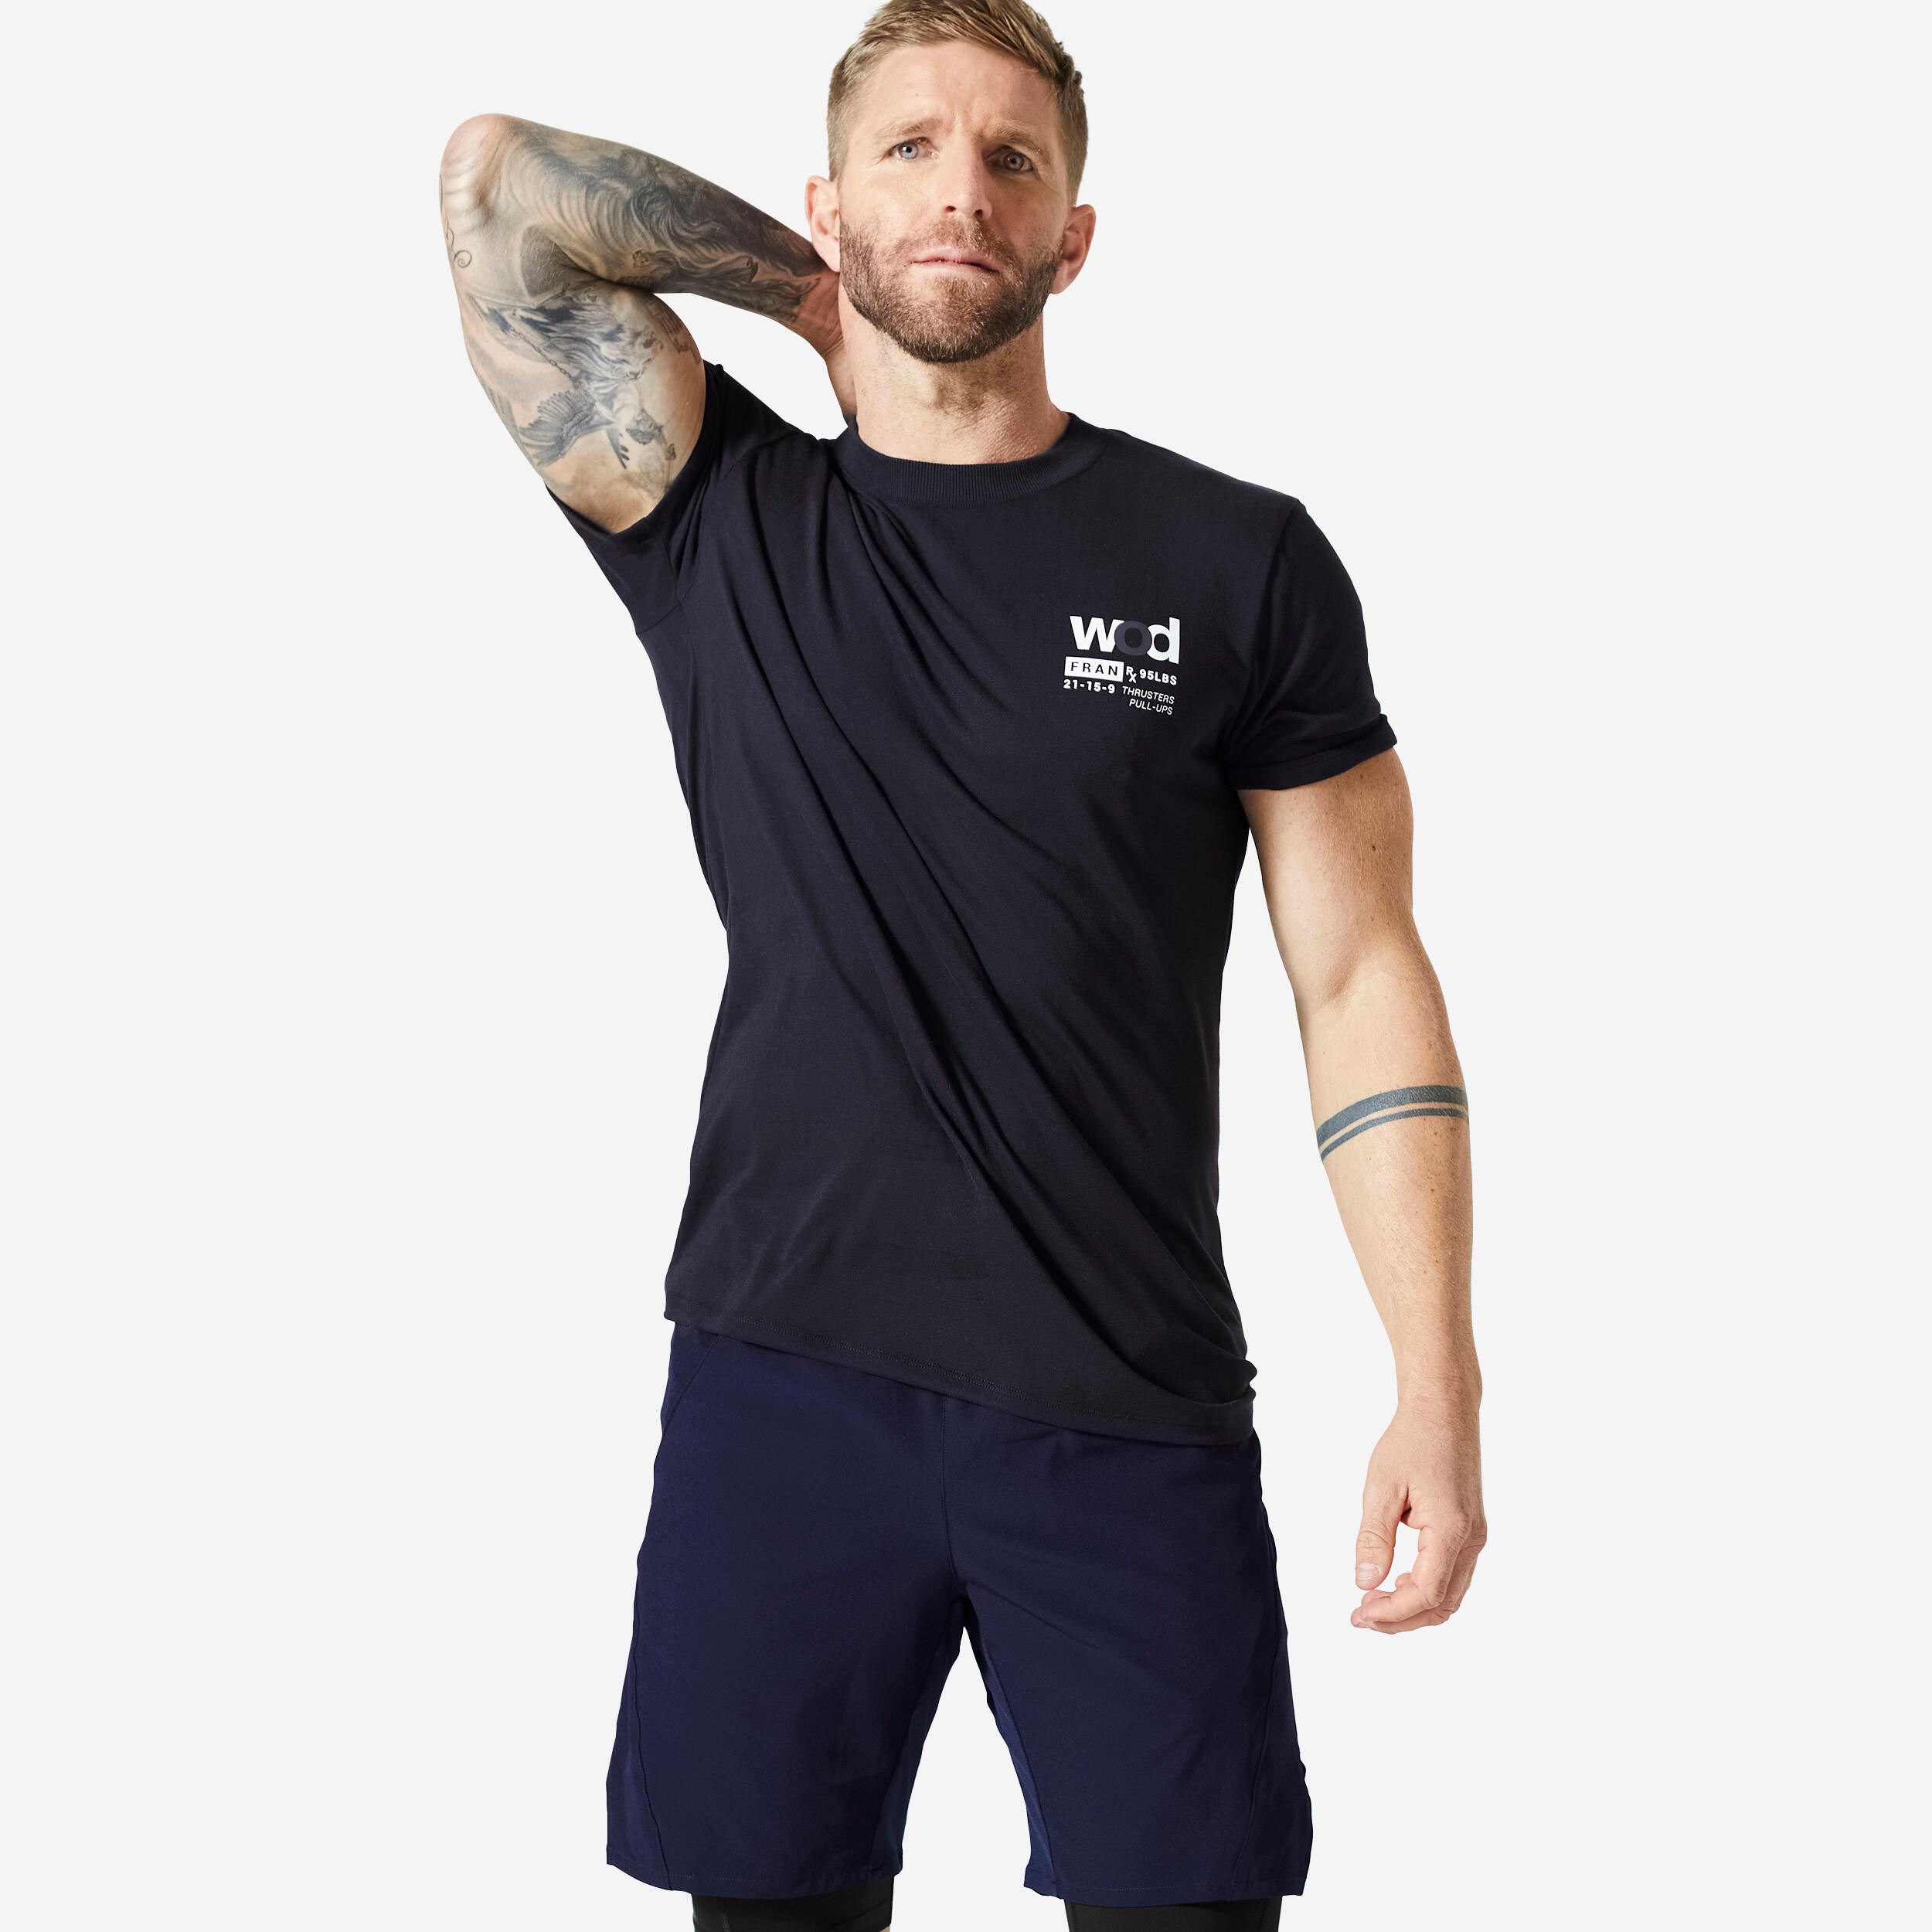 DOMYOS T-Shirt De Cross Training Respirant Slim Doux Col Rond Homme - Noir